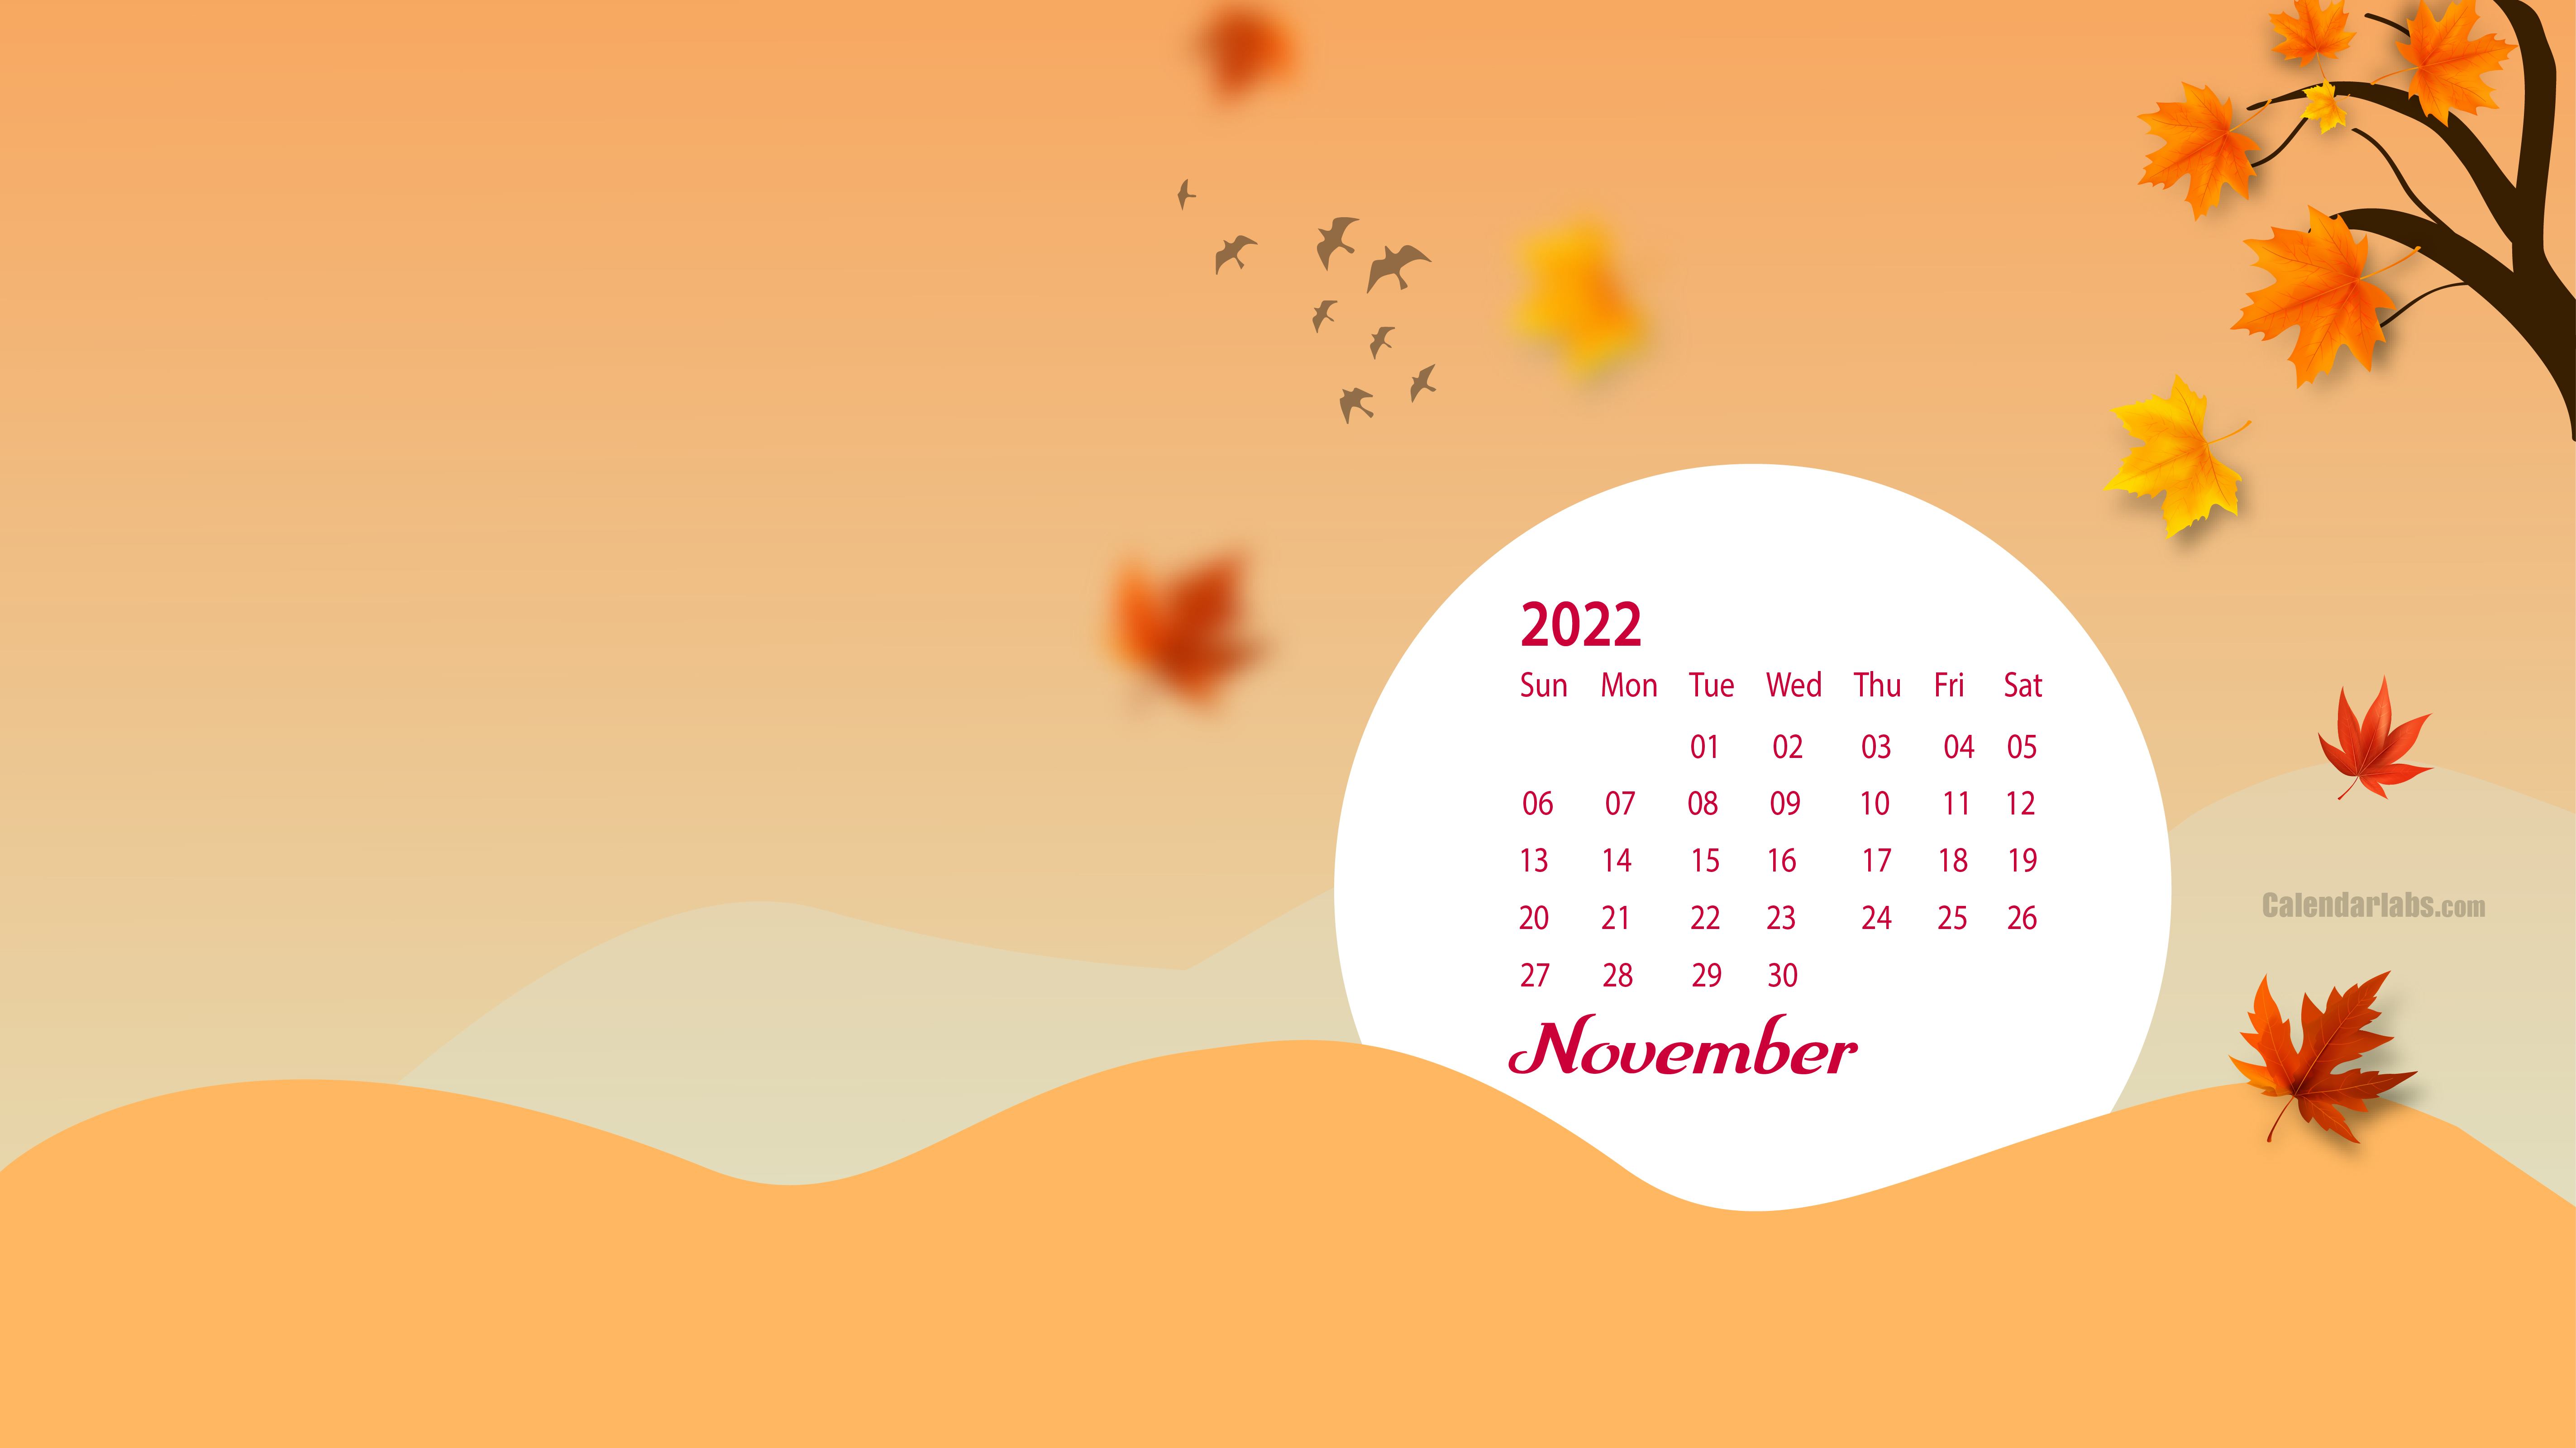 November 2022 Desktop Wallpaper Calendar   CalendarLabs